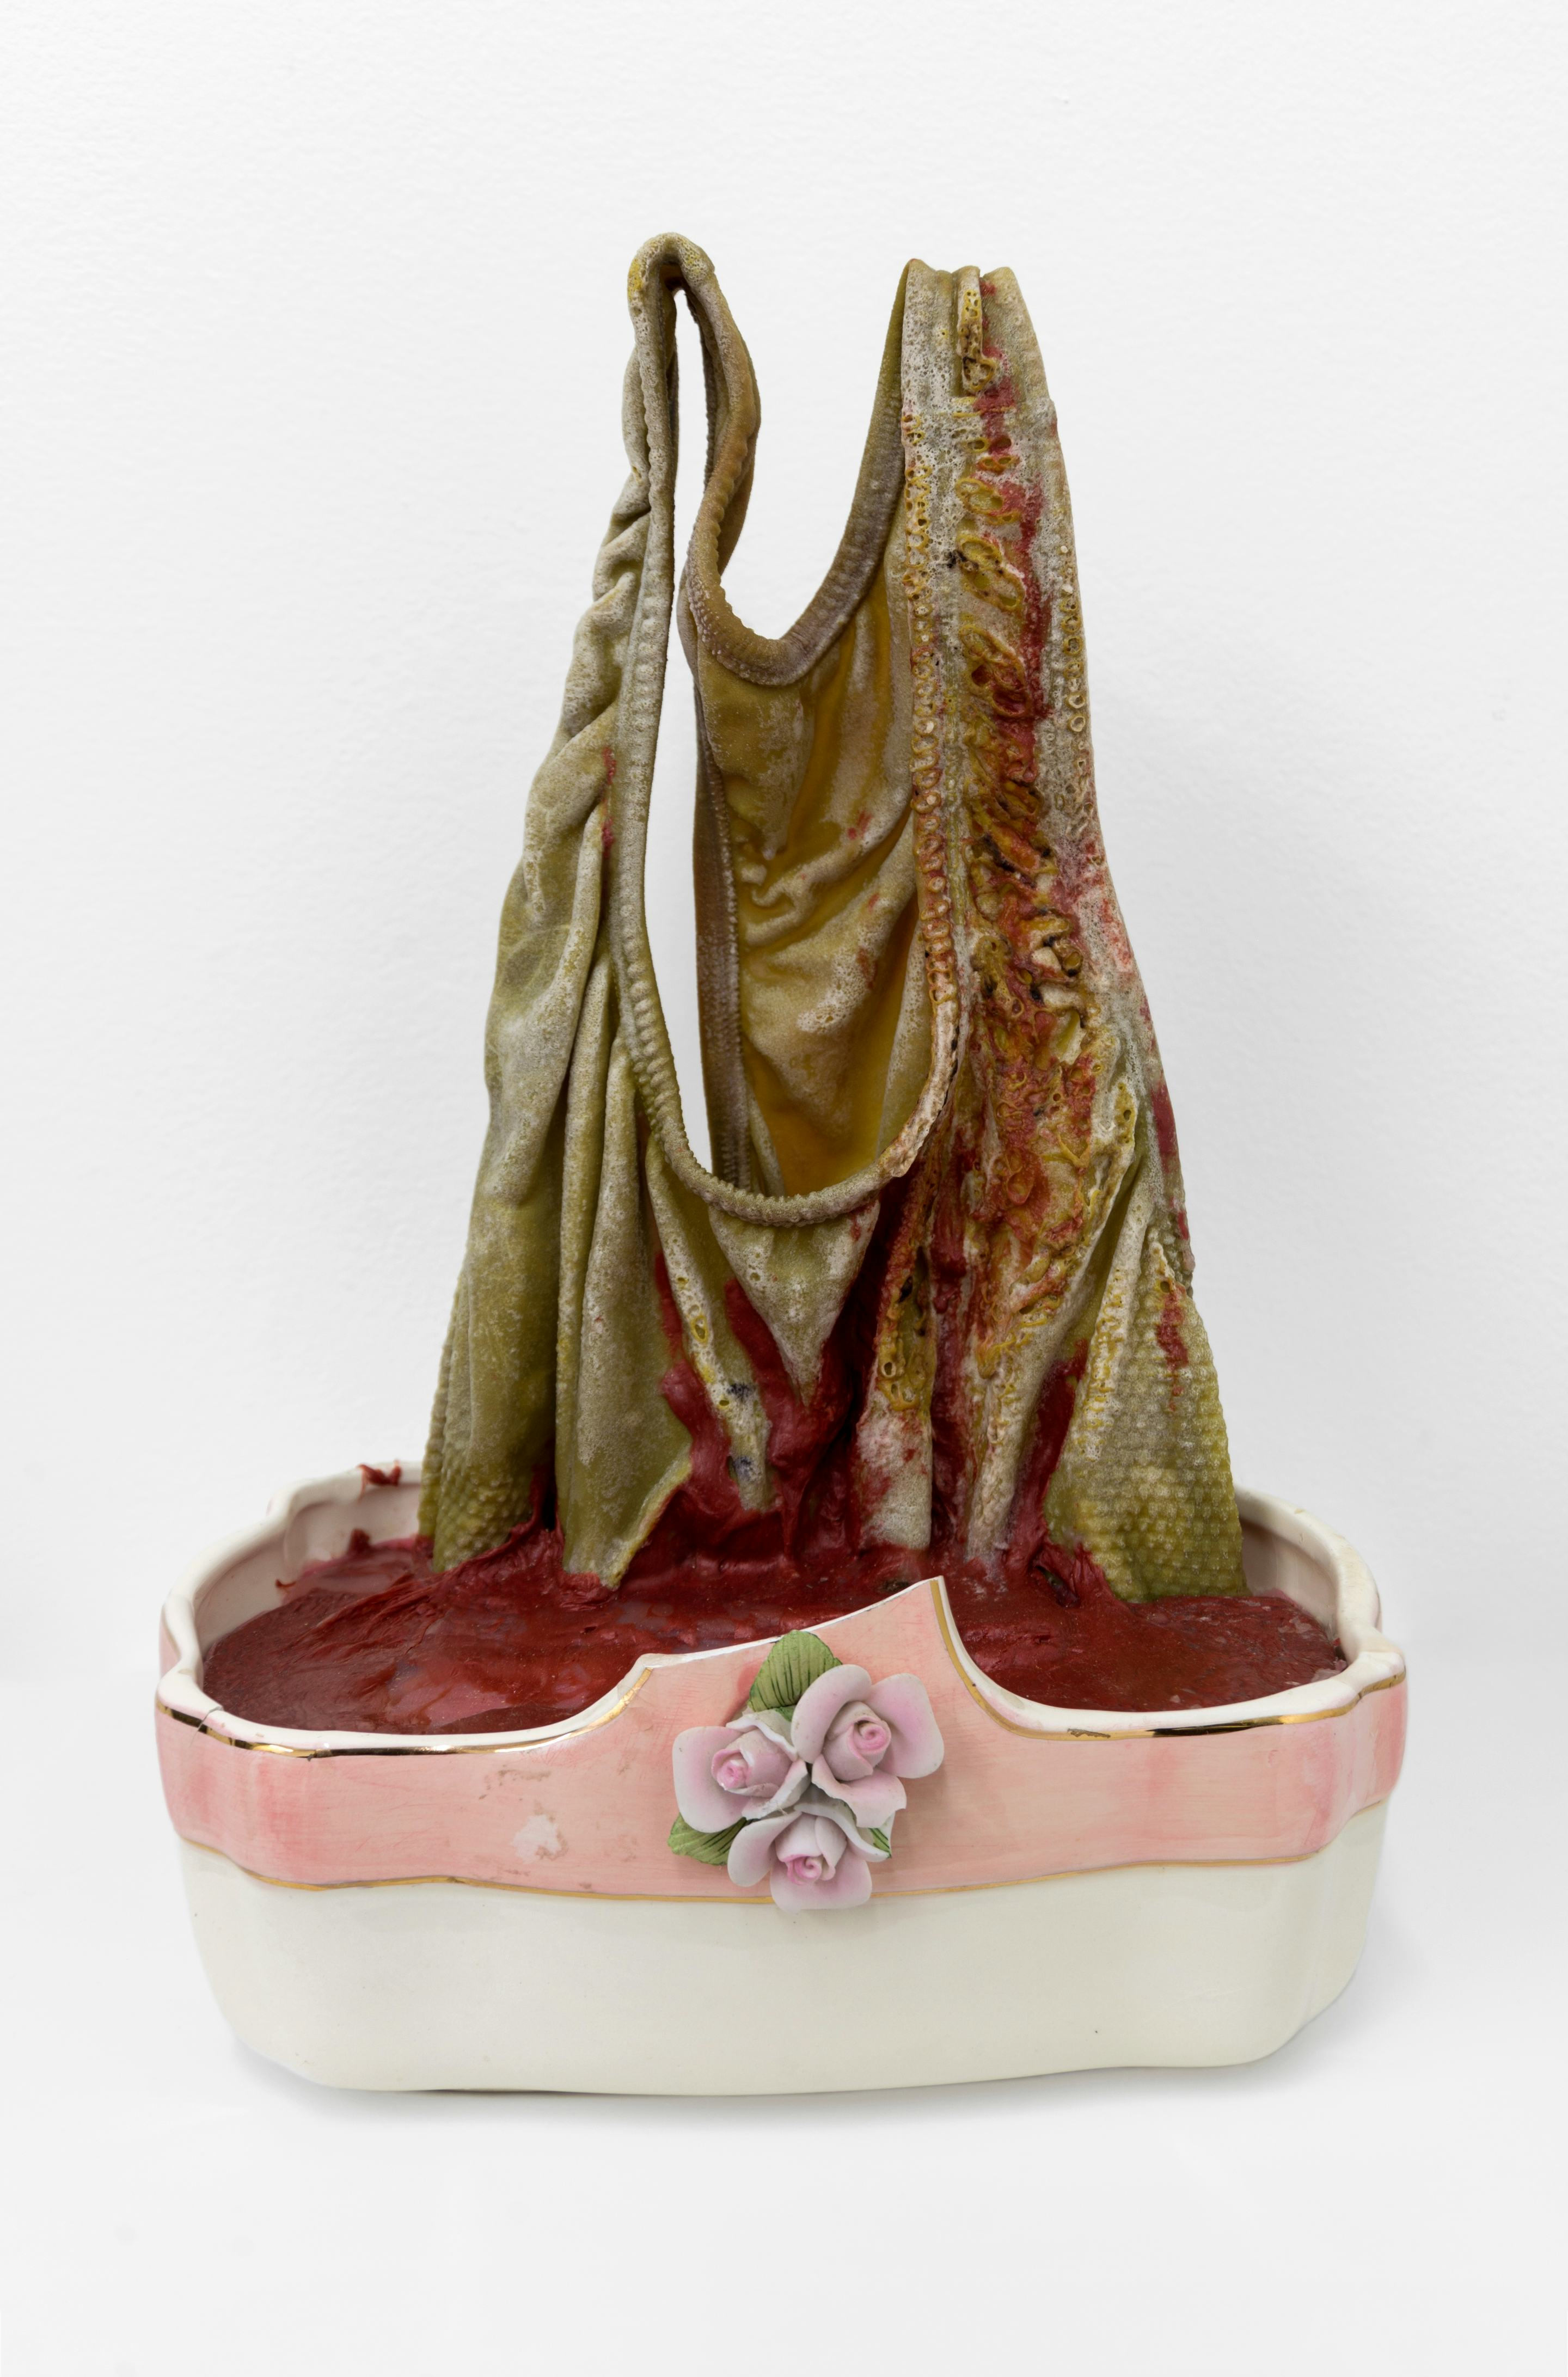 Bri Williams
Prometheus (2021)
Ceramic, wax, bra
8.75 x 12.75 x 6.5 inches (22 x 32.4 x 16.5 cm)